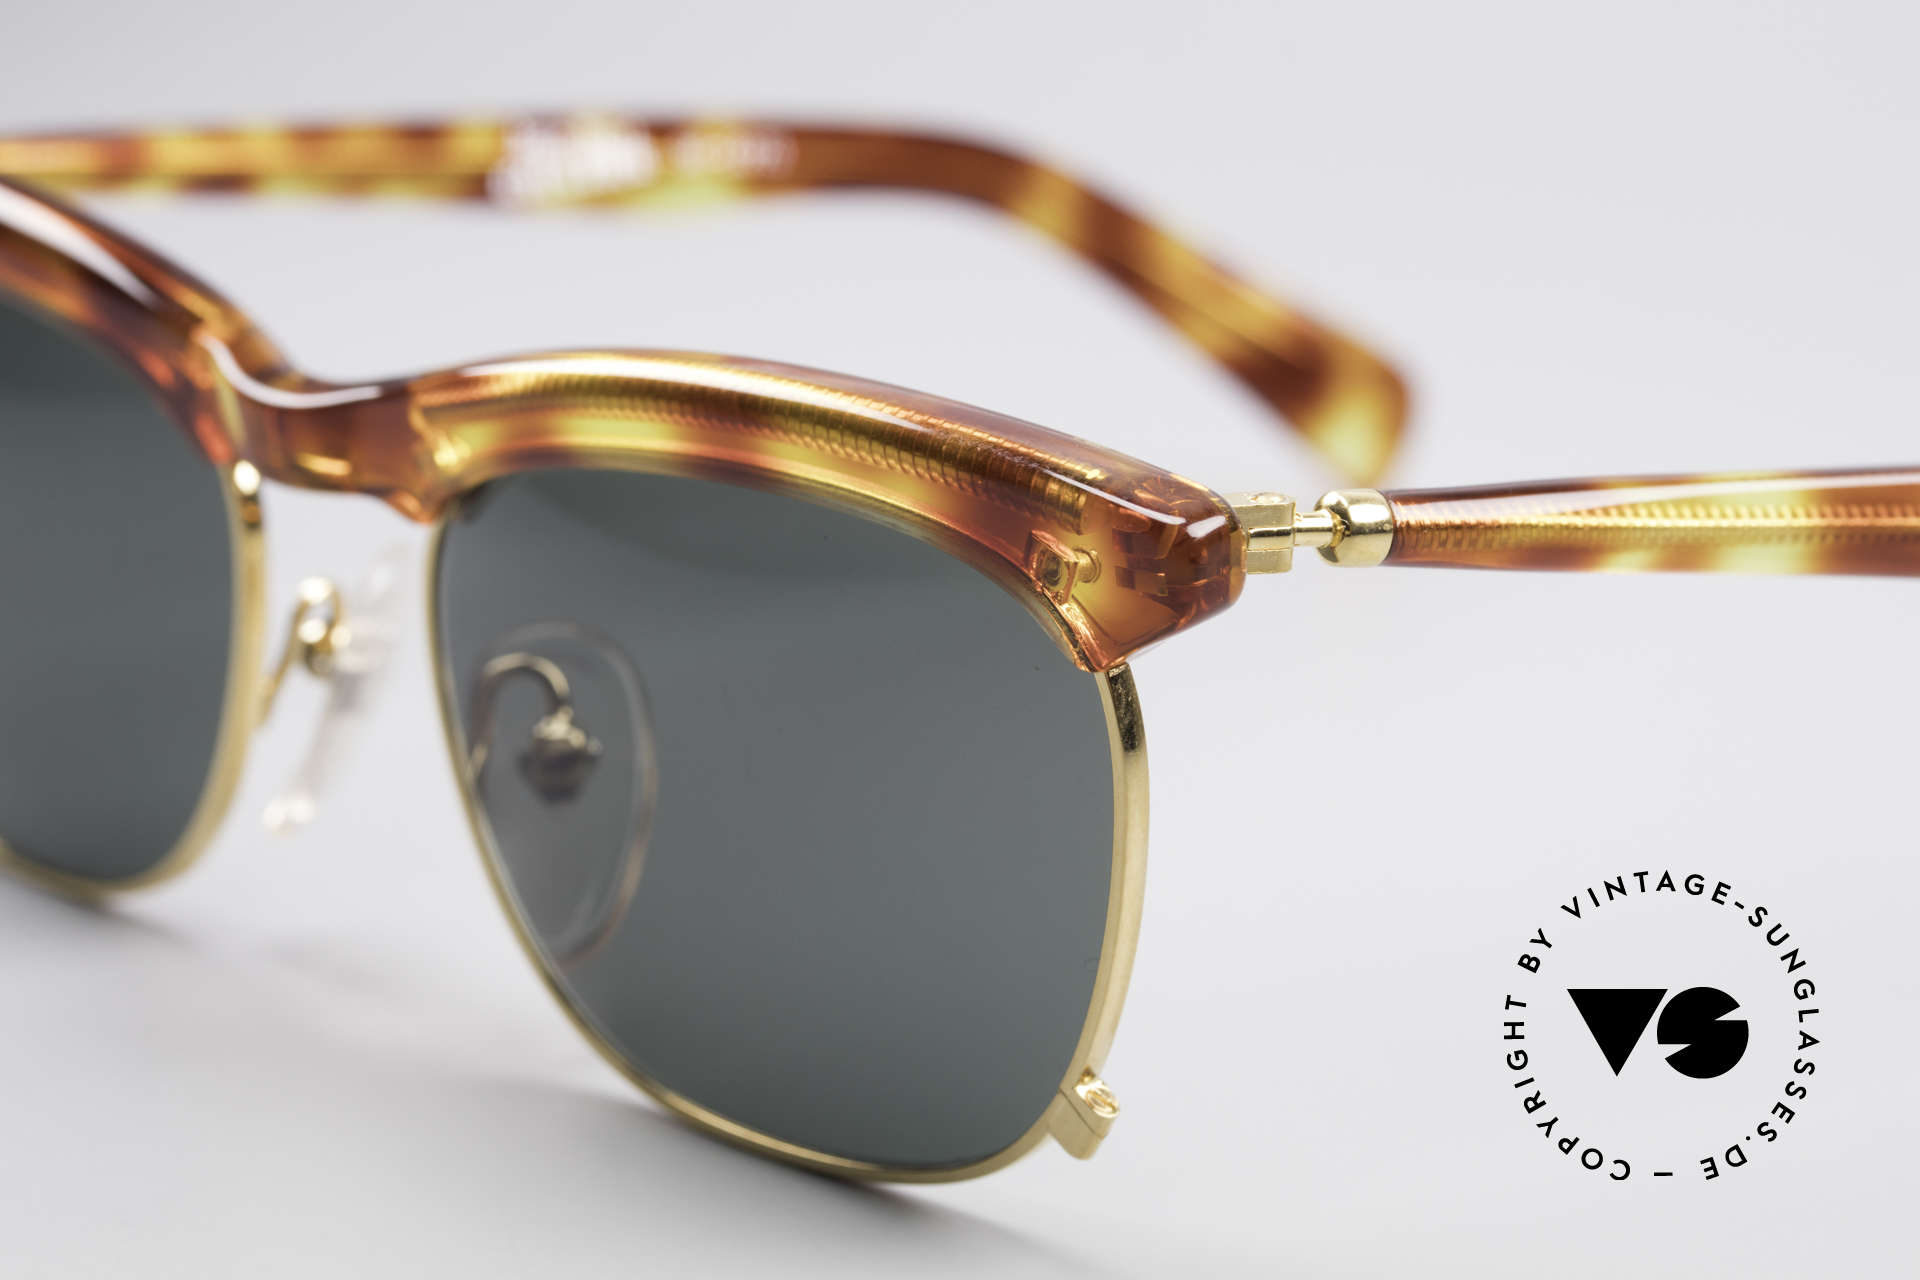 Sunglasses Jean Paul Gaultier 56-0273 Classic Designer Sunglasses